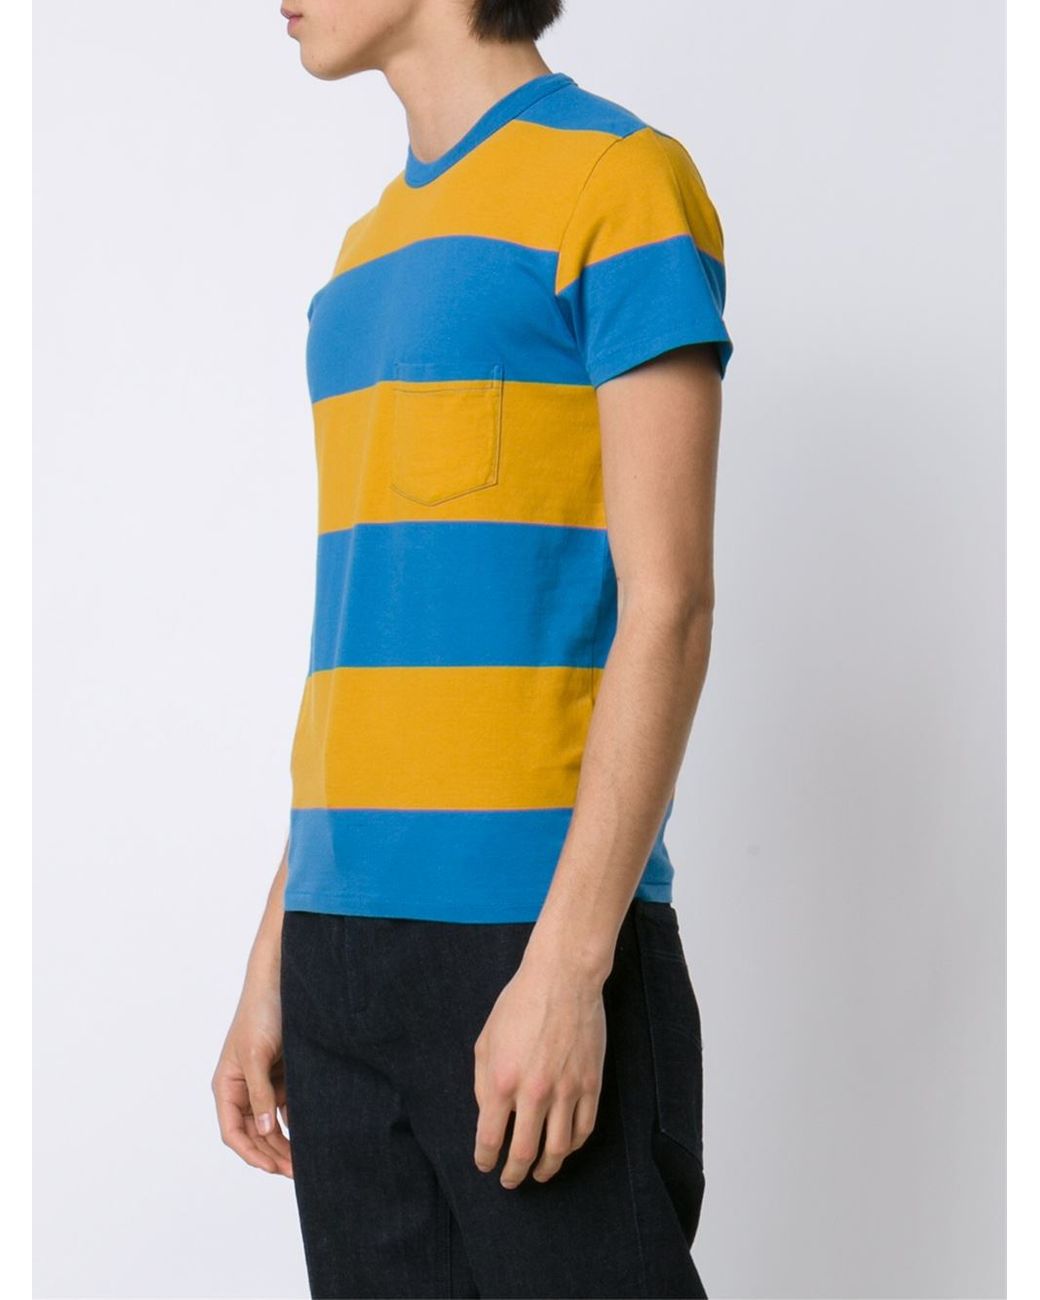 Levi's Vintage Clothing 1960s Casual Stripe T-Shirt - Dark Denim Blue/Orange